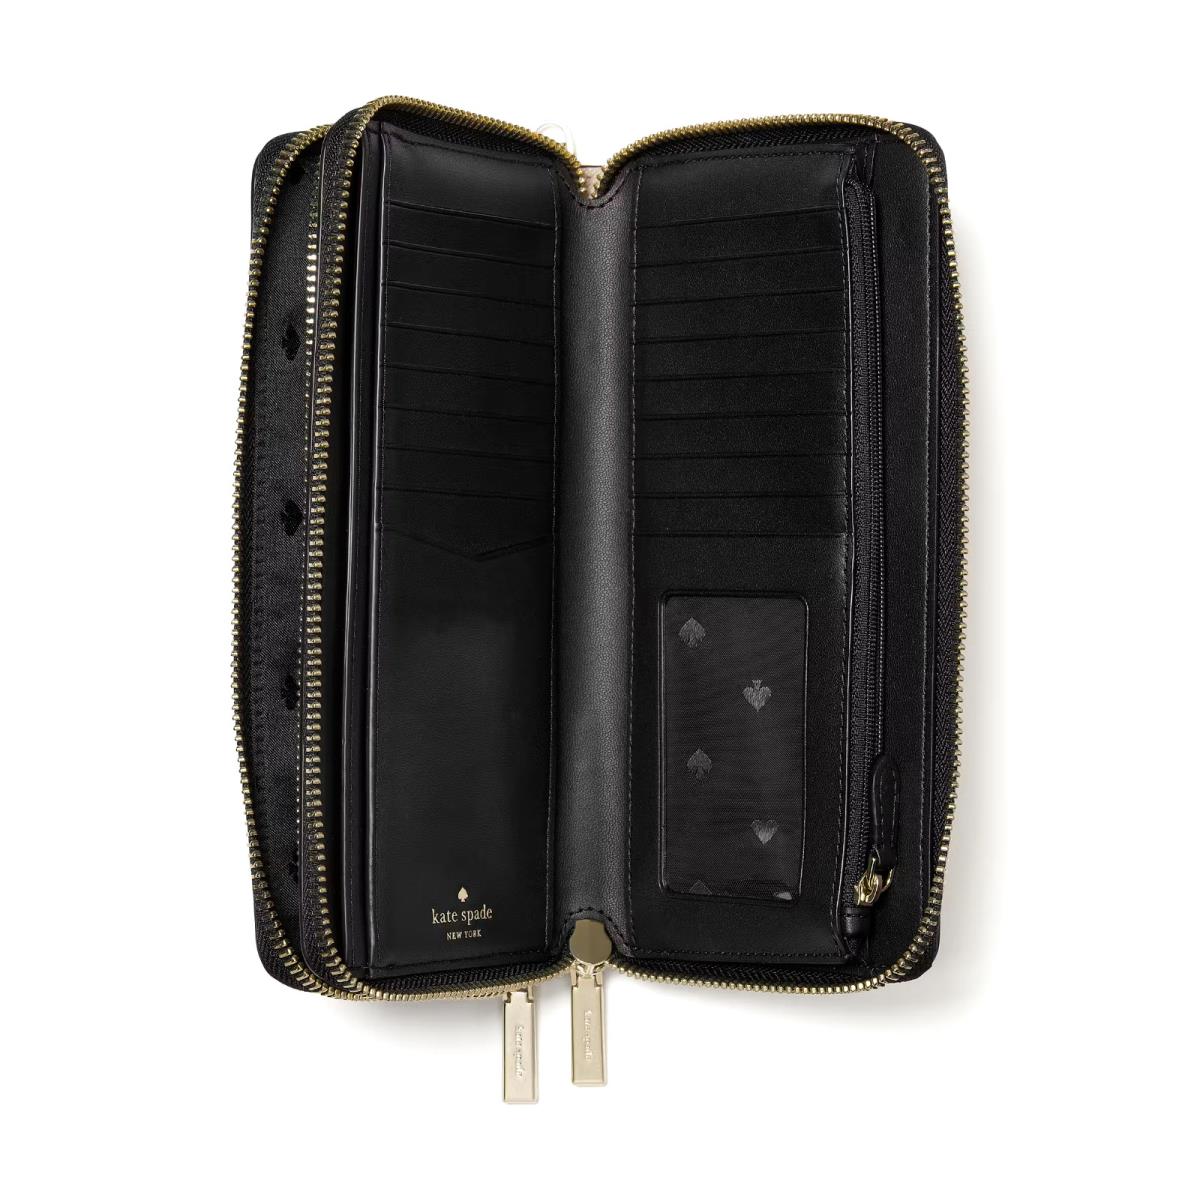 New Kate Spade Staci Large Carryall Wristlet Wallet Warm Beige Multi / Dust Bag